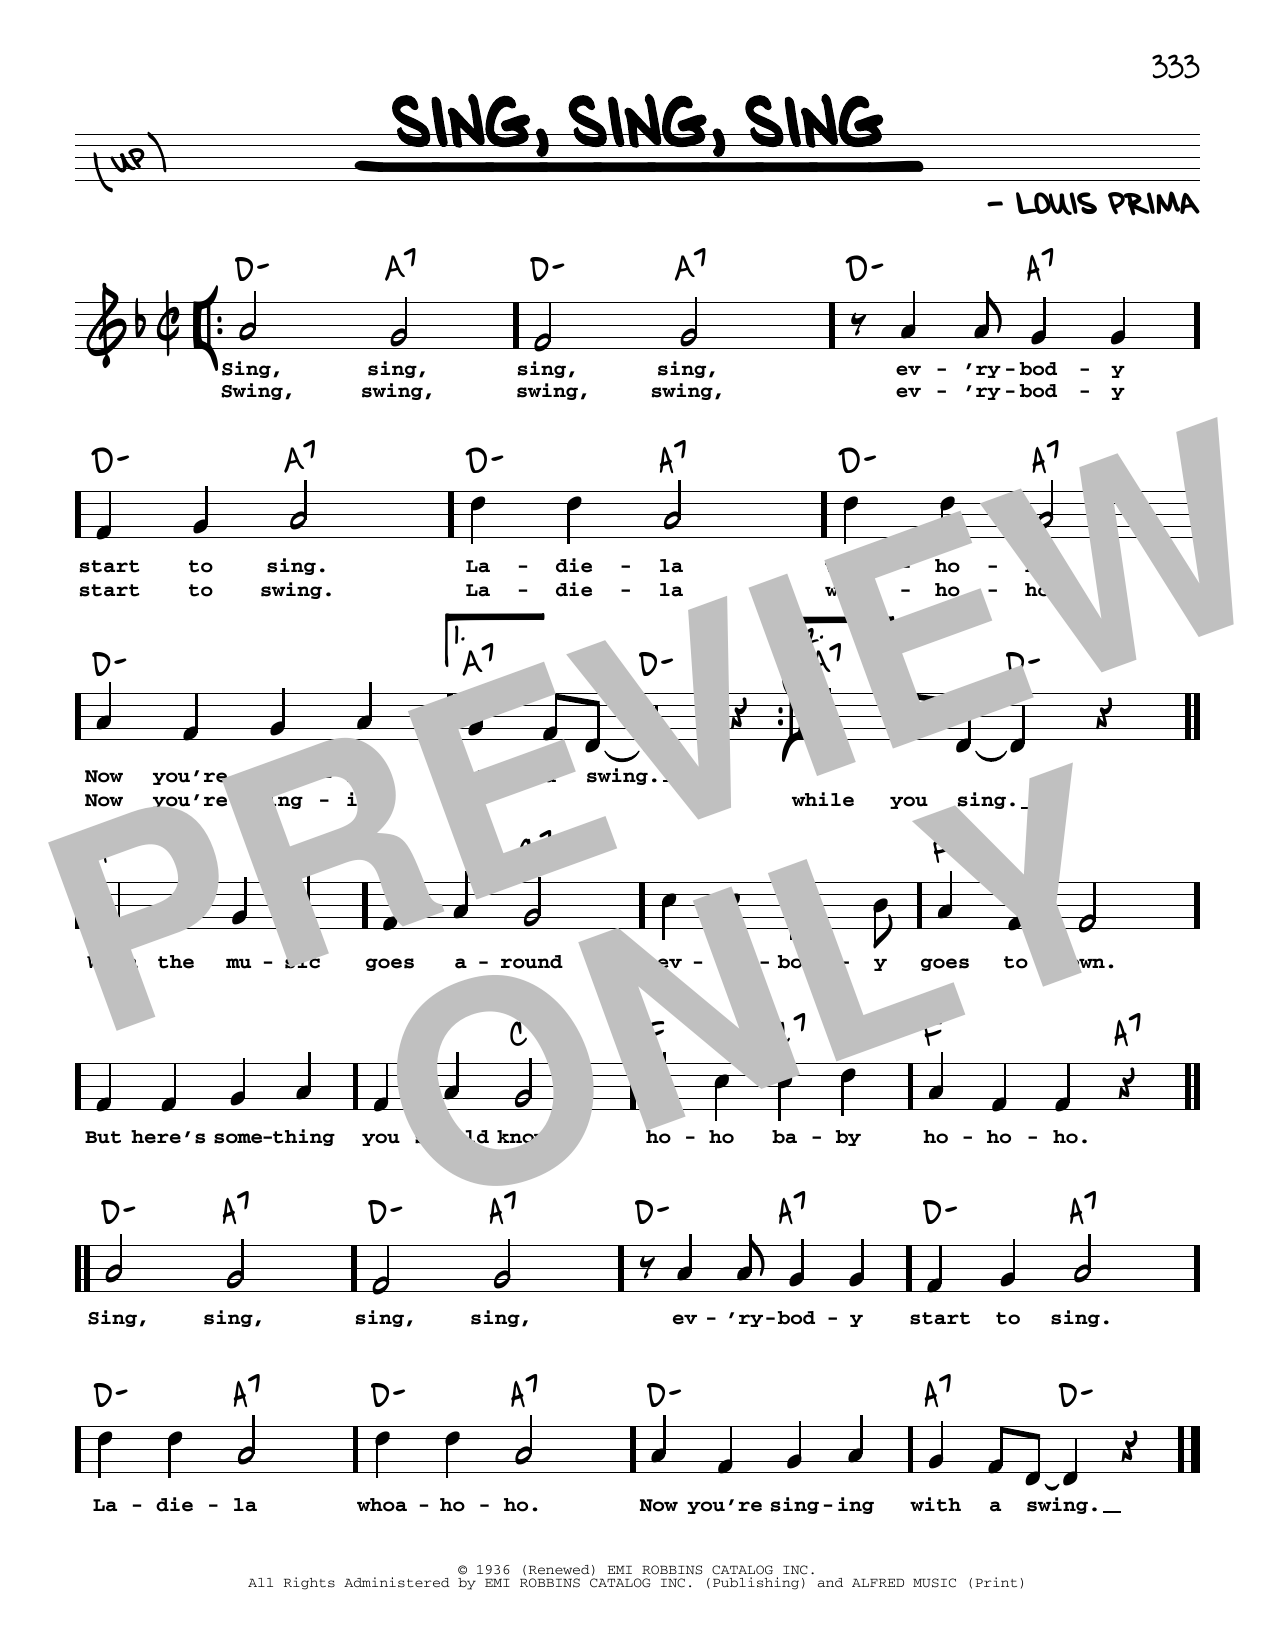 Louis Prima Sing, Sing, Sing (High Voice) Sheet Music Notes & Chords for Real Book – Melody, Lyrics & Chords - Download or Print PDF